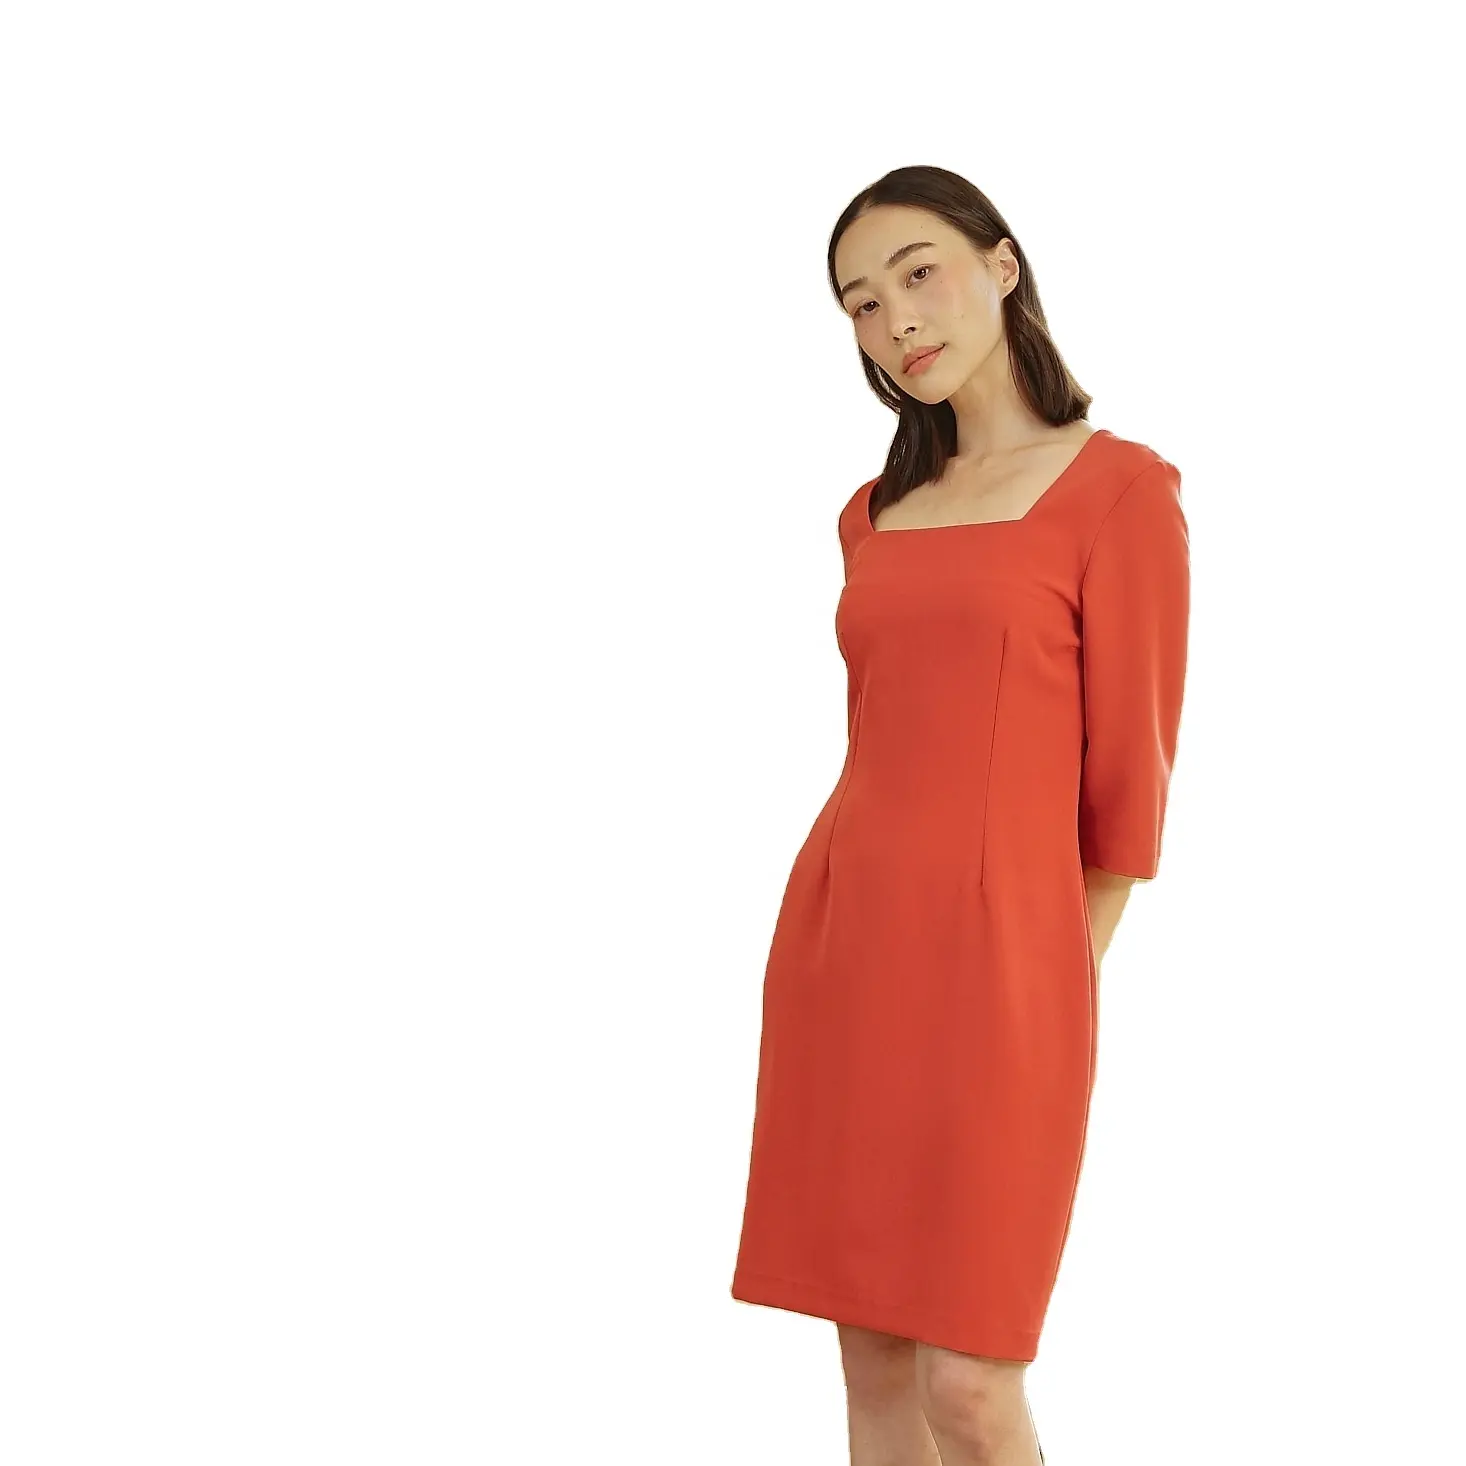 Square Neck Dress Mandarin Color Formal Working Apparel Dresses Wholesale Women Clothes Plus Size Woman's Clothing